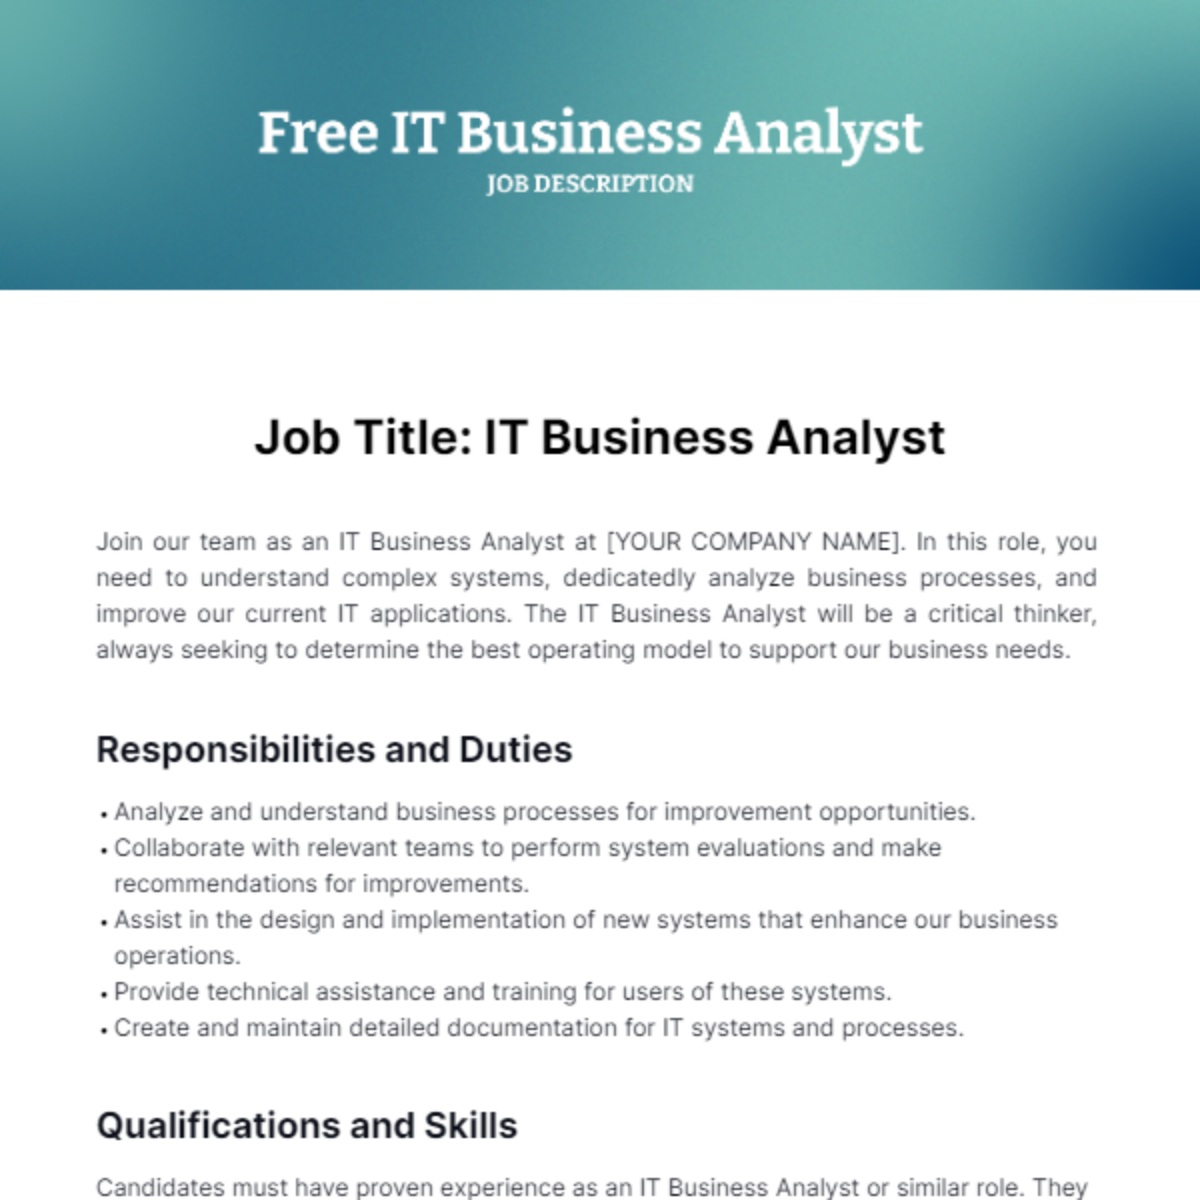 IT Business Analyst Job Description Template